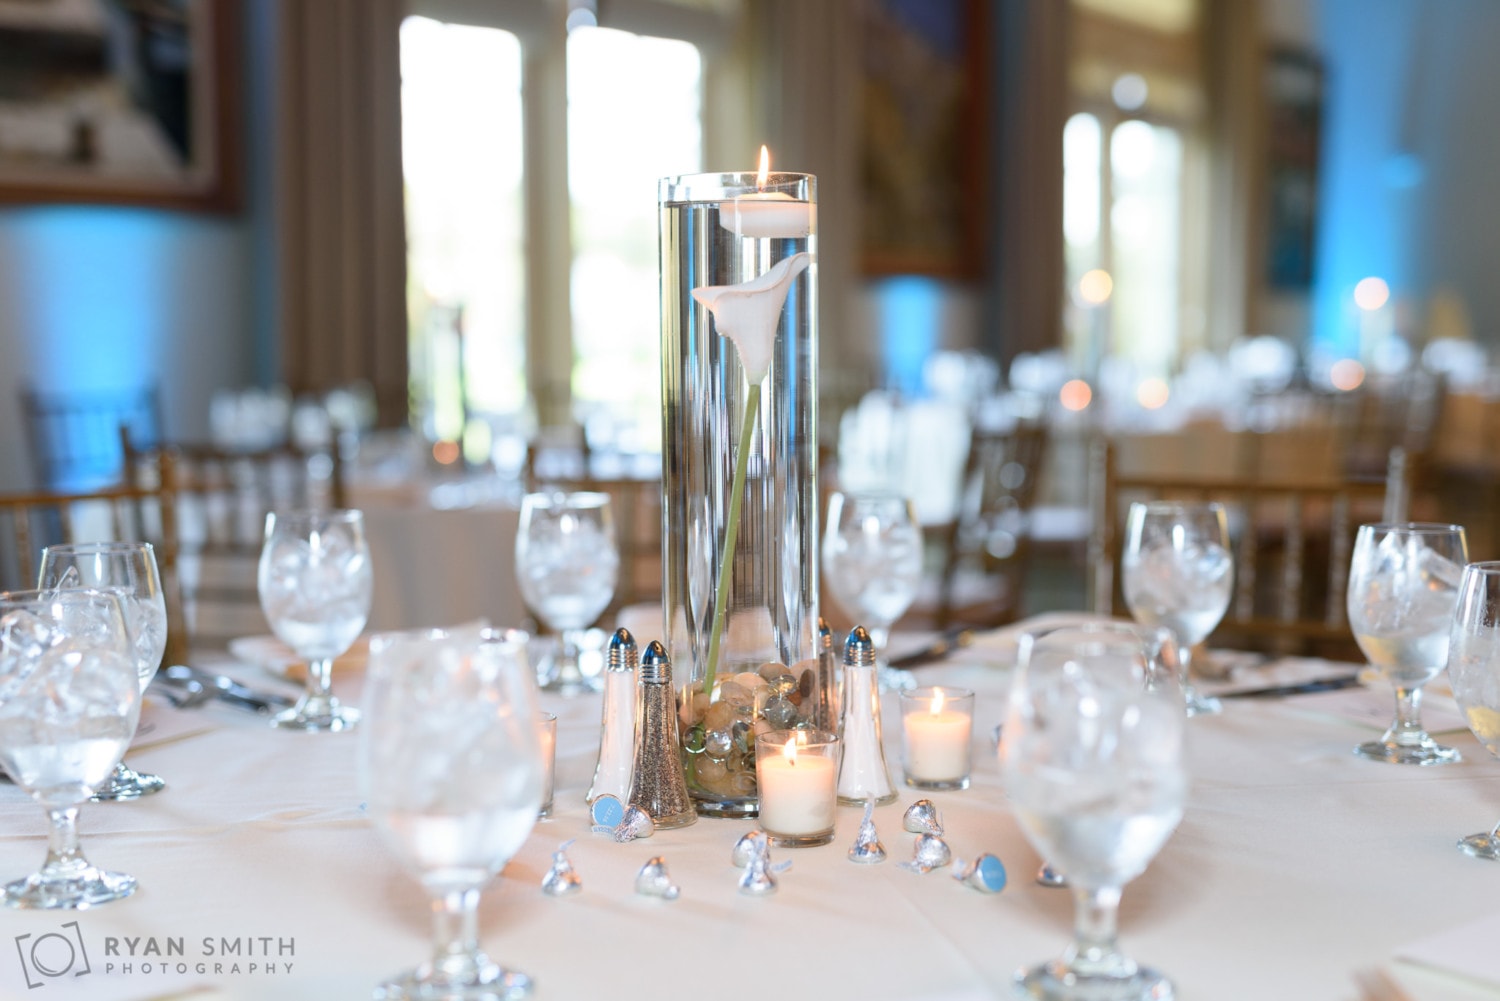 Table details in ballroom - Members Club at Grande Dunes